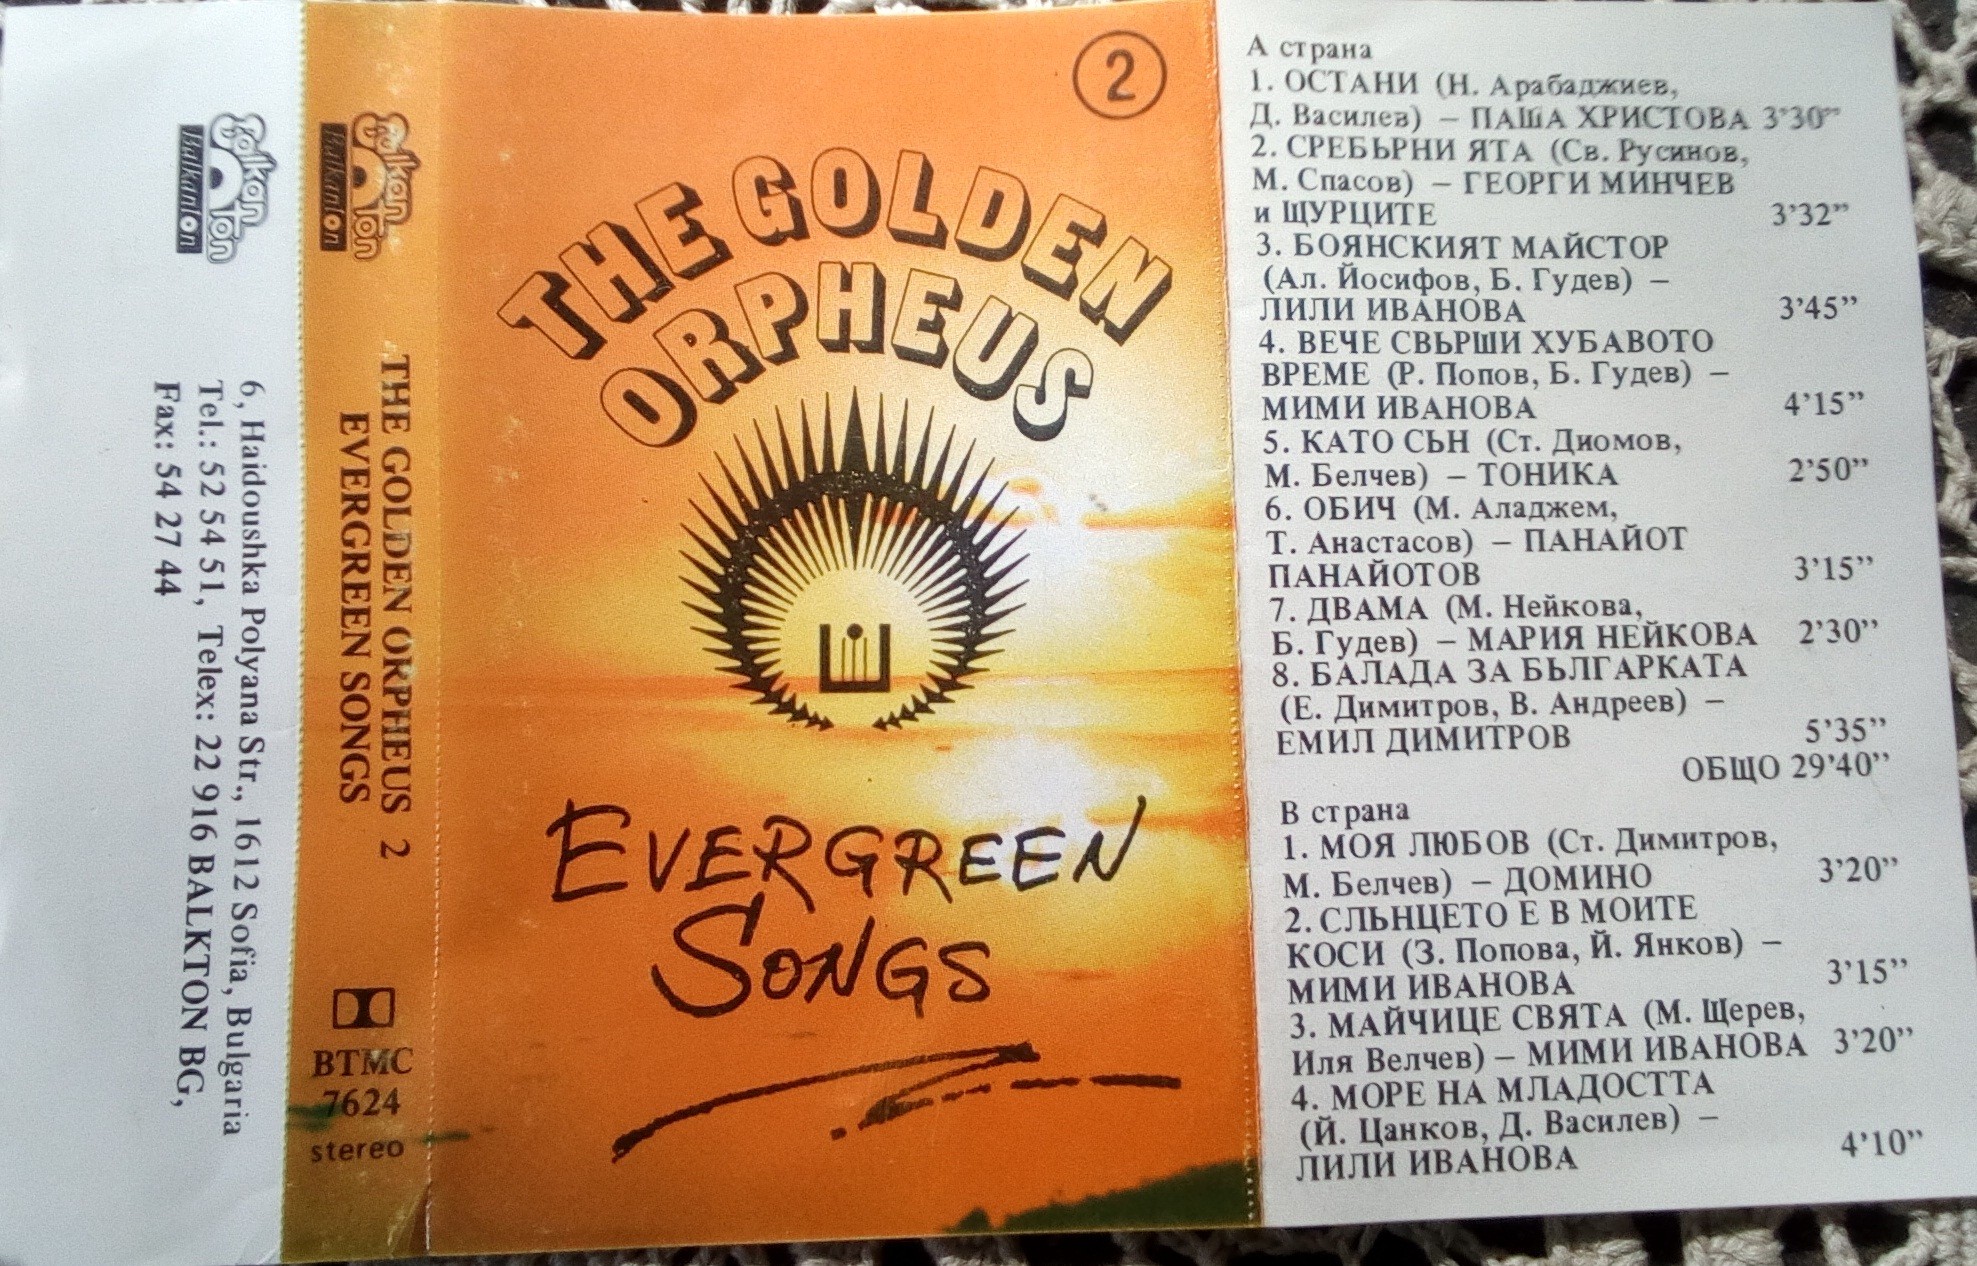 The Golden orpheus: evergreen songs 2